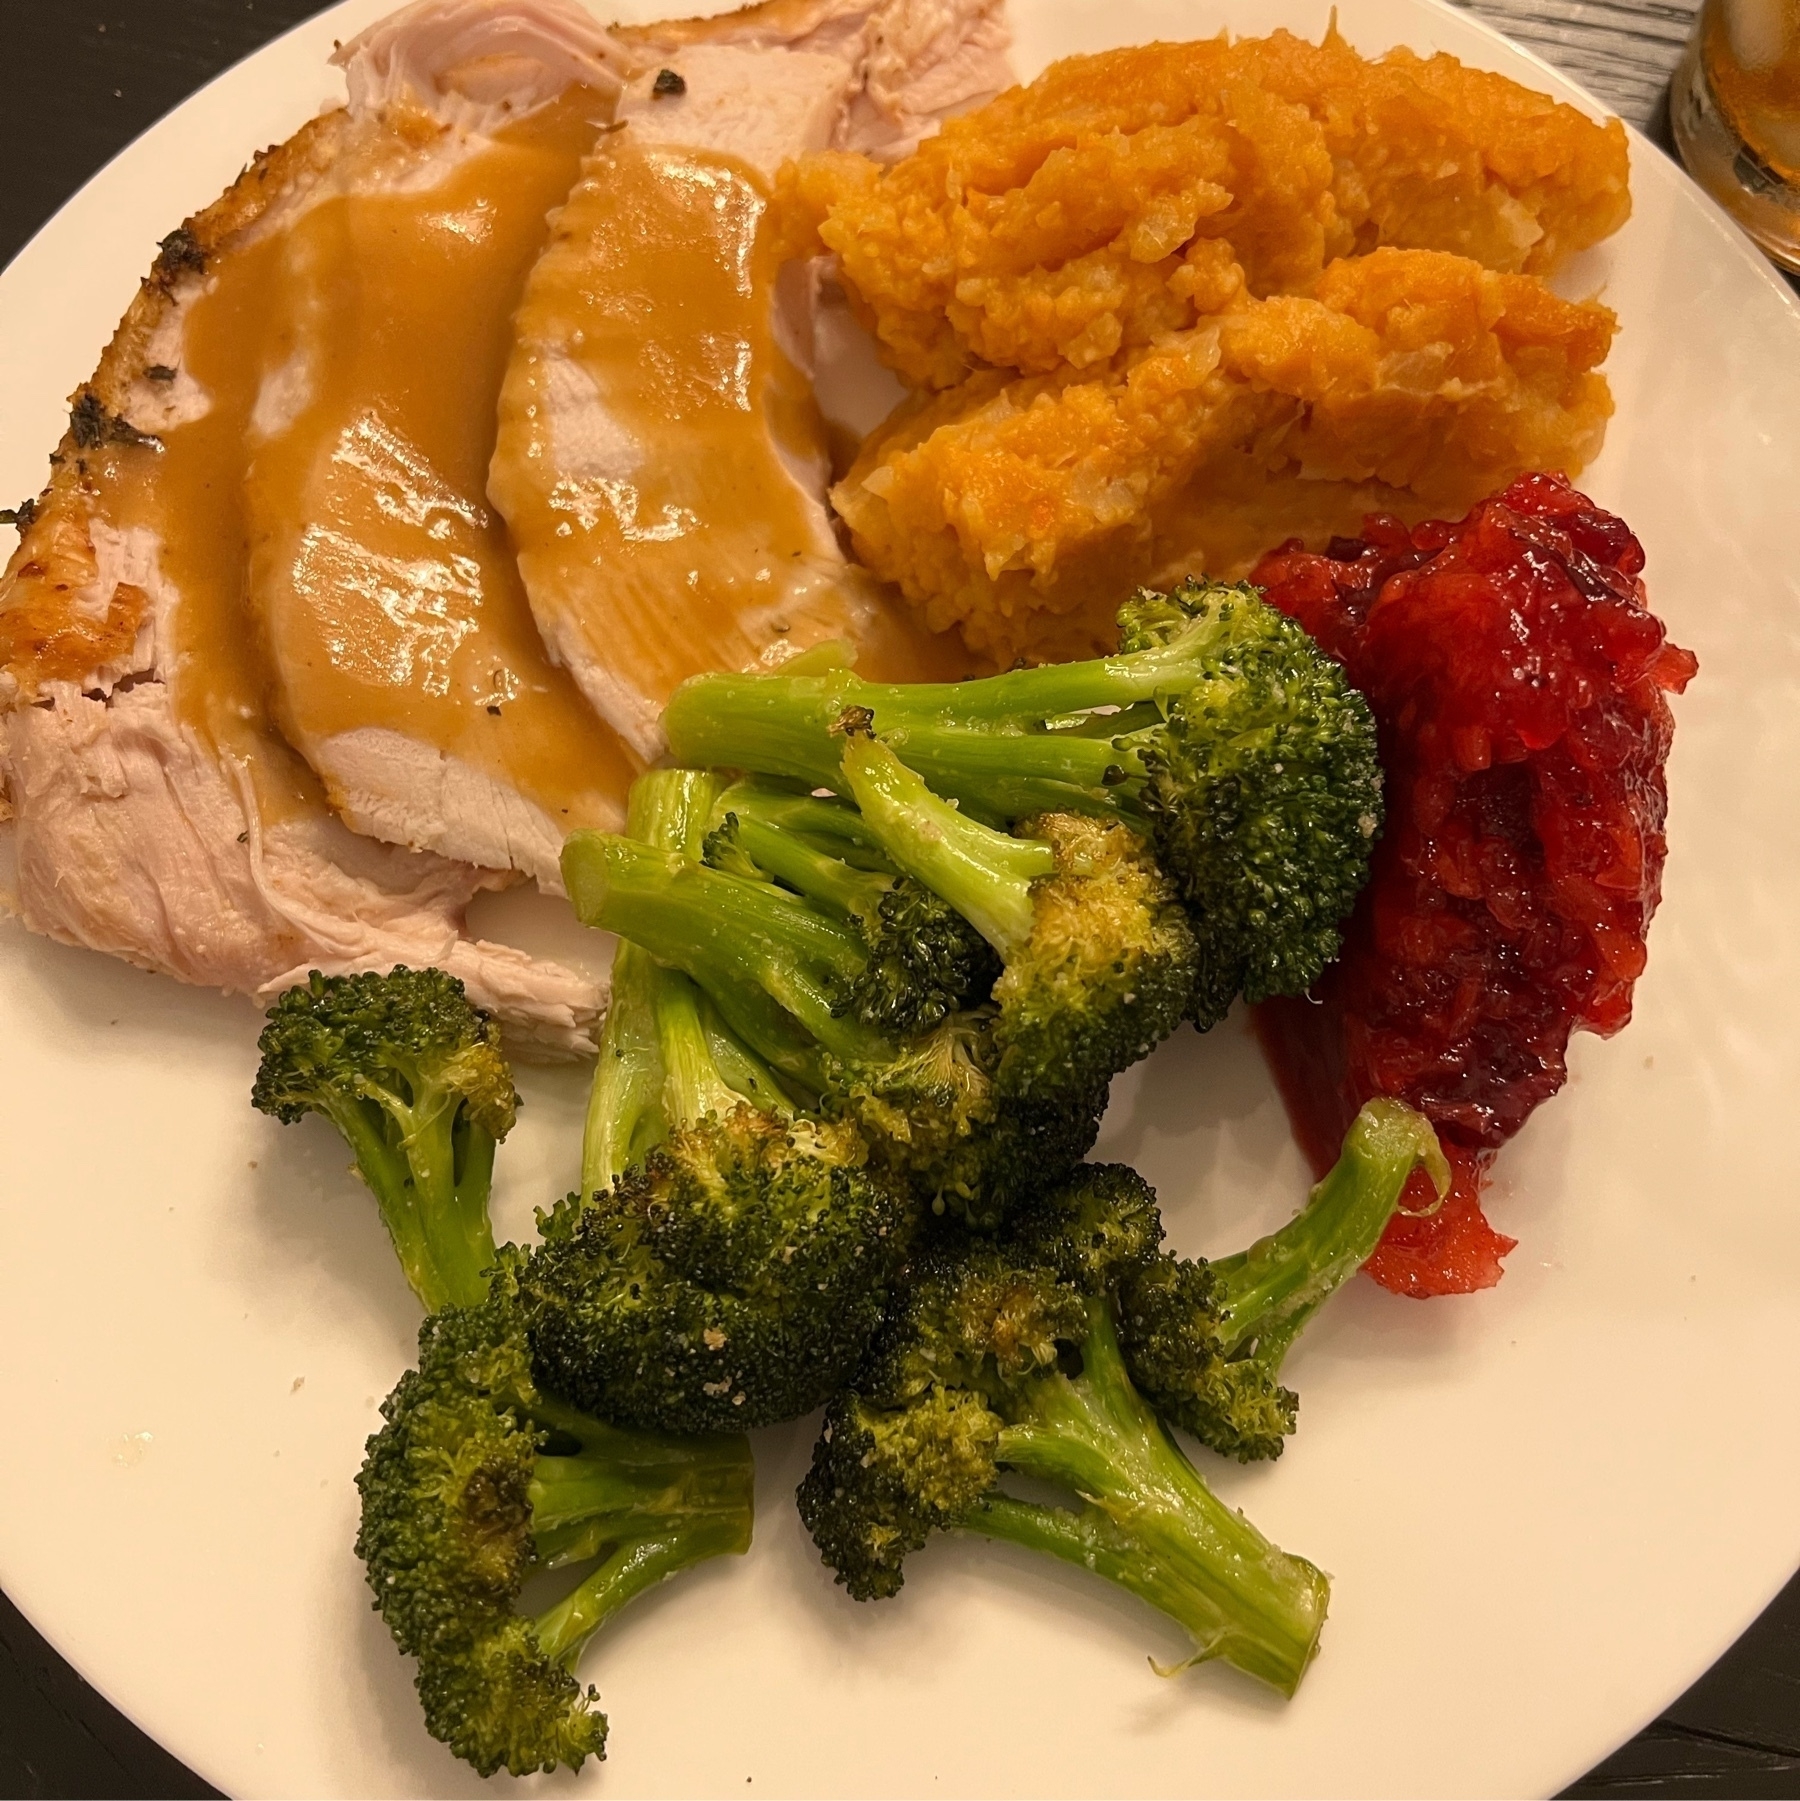 Turkey and gravy, sweet potato, cranberry, and broccoli.